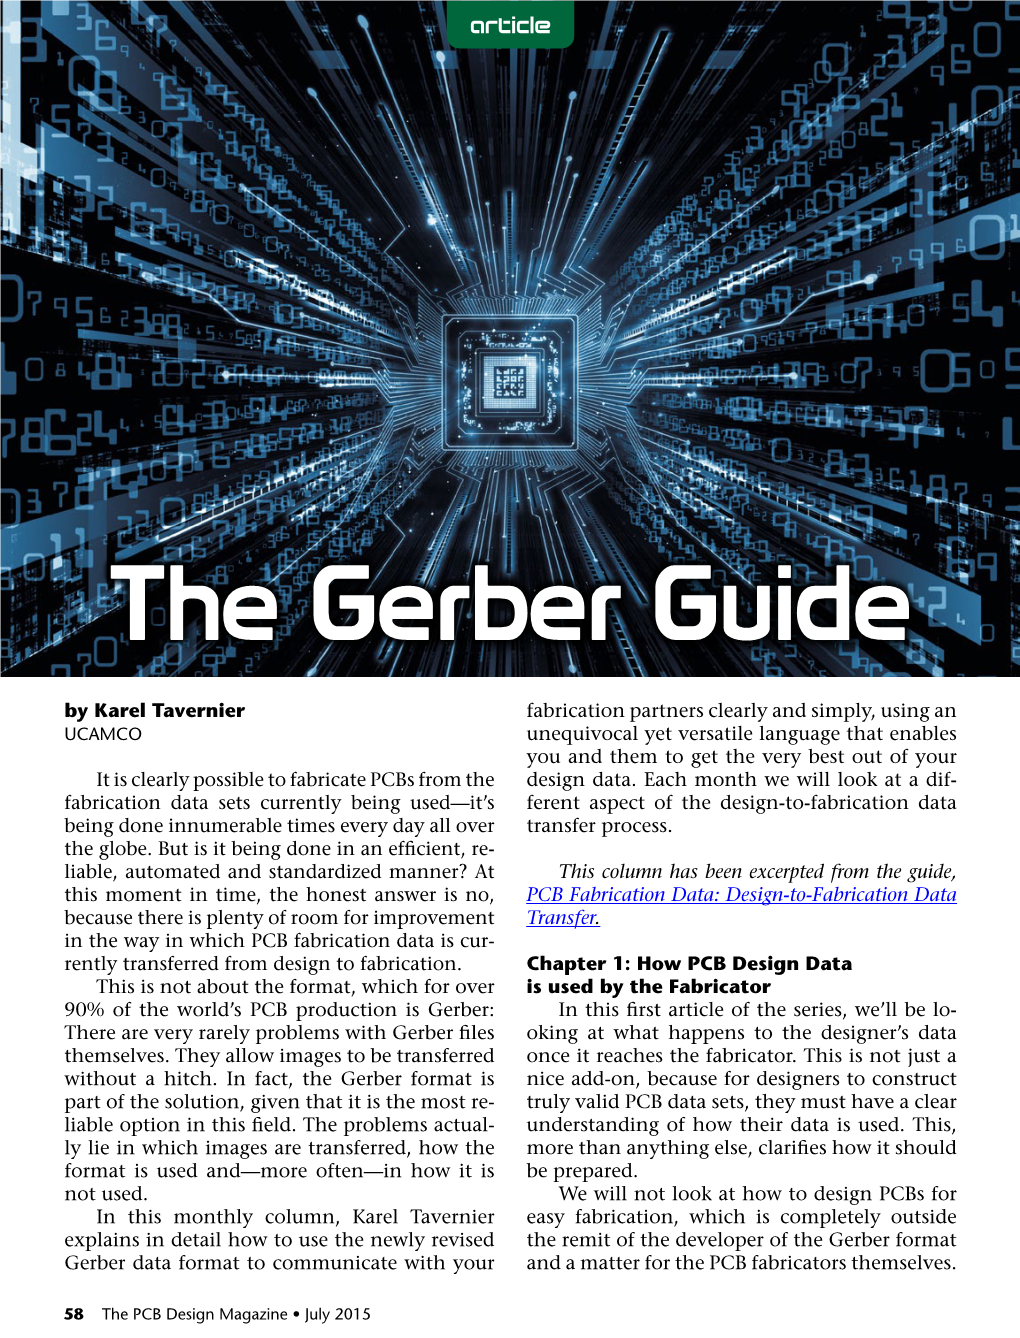 The Gerber Guide (PCB Design Magazine) (Pdf)